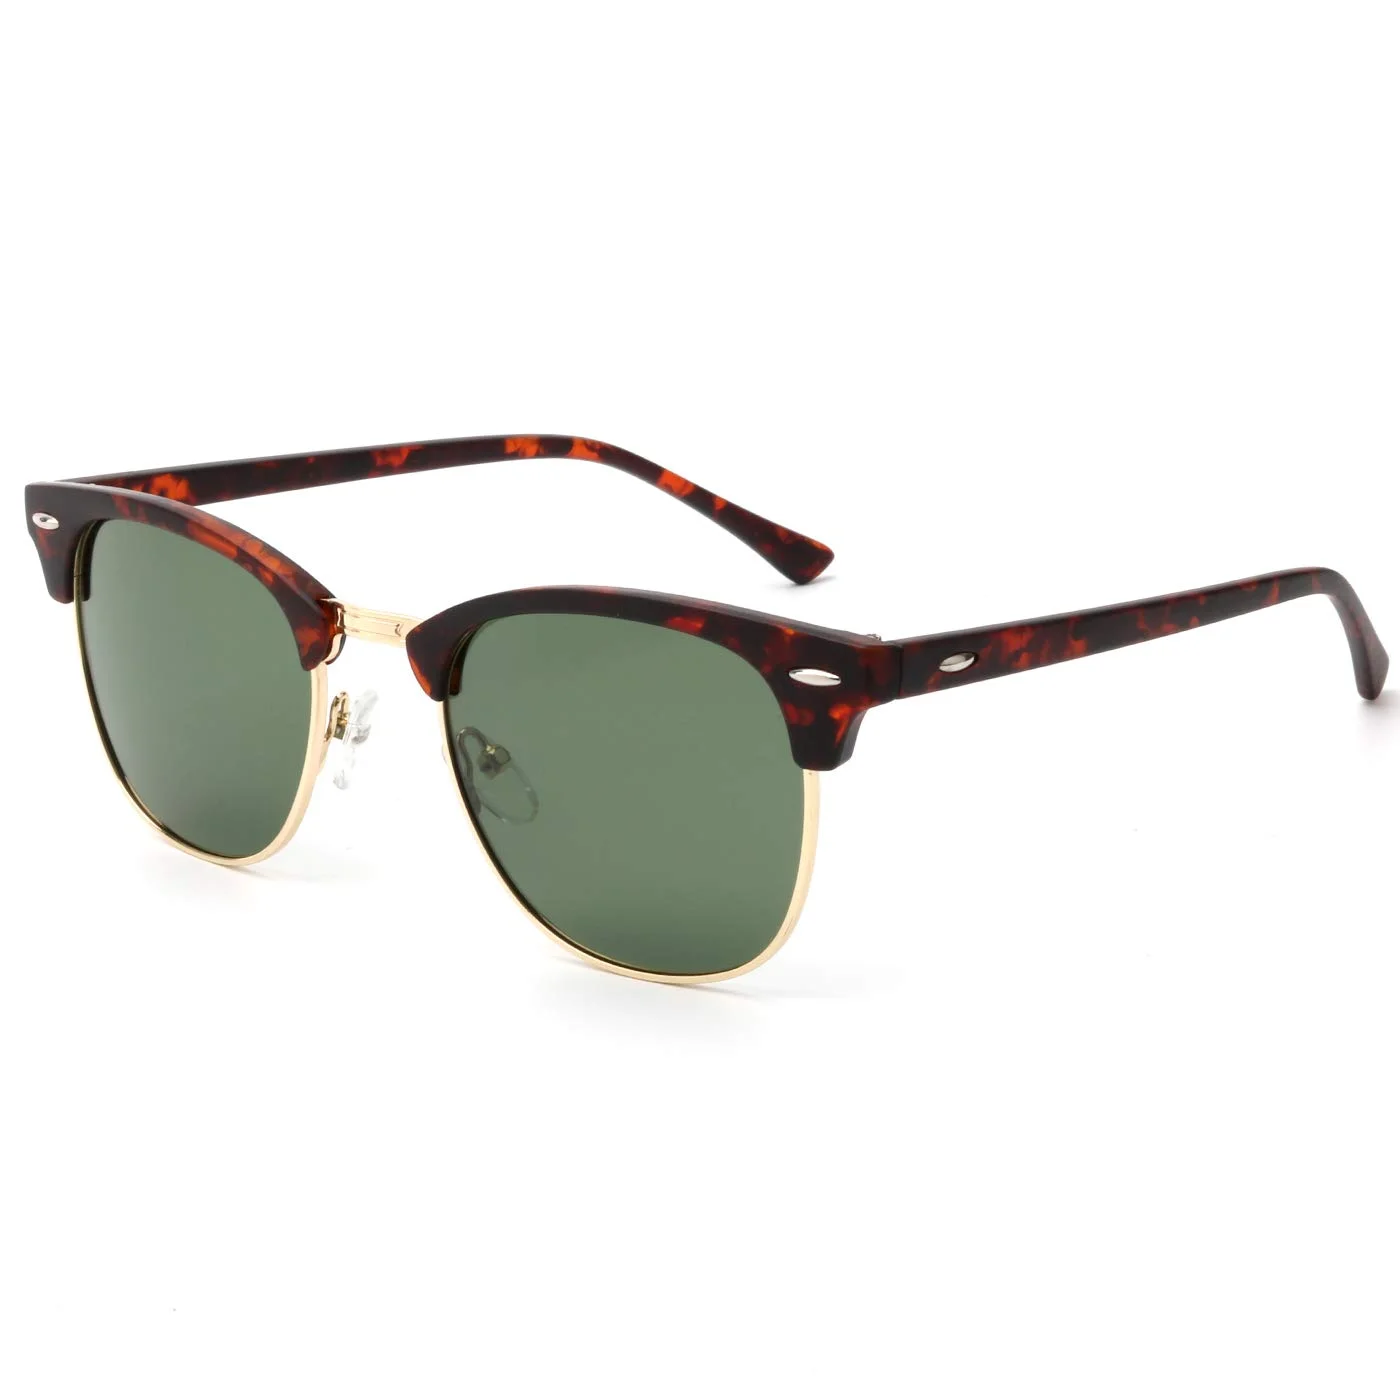 Kaliyadi + Unisex Polarized Sunglasses Stylish Sun Glasses for Men